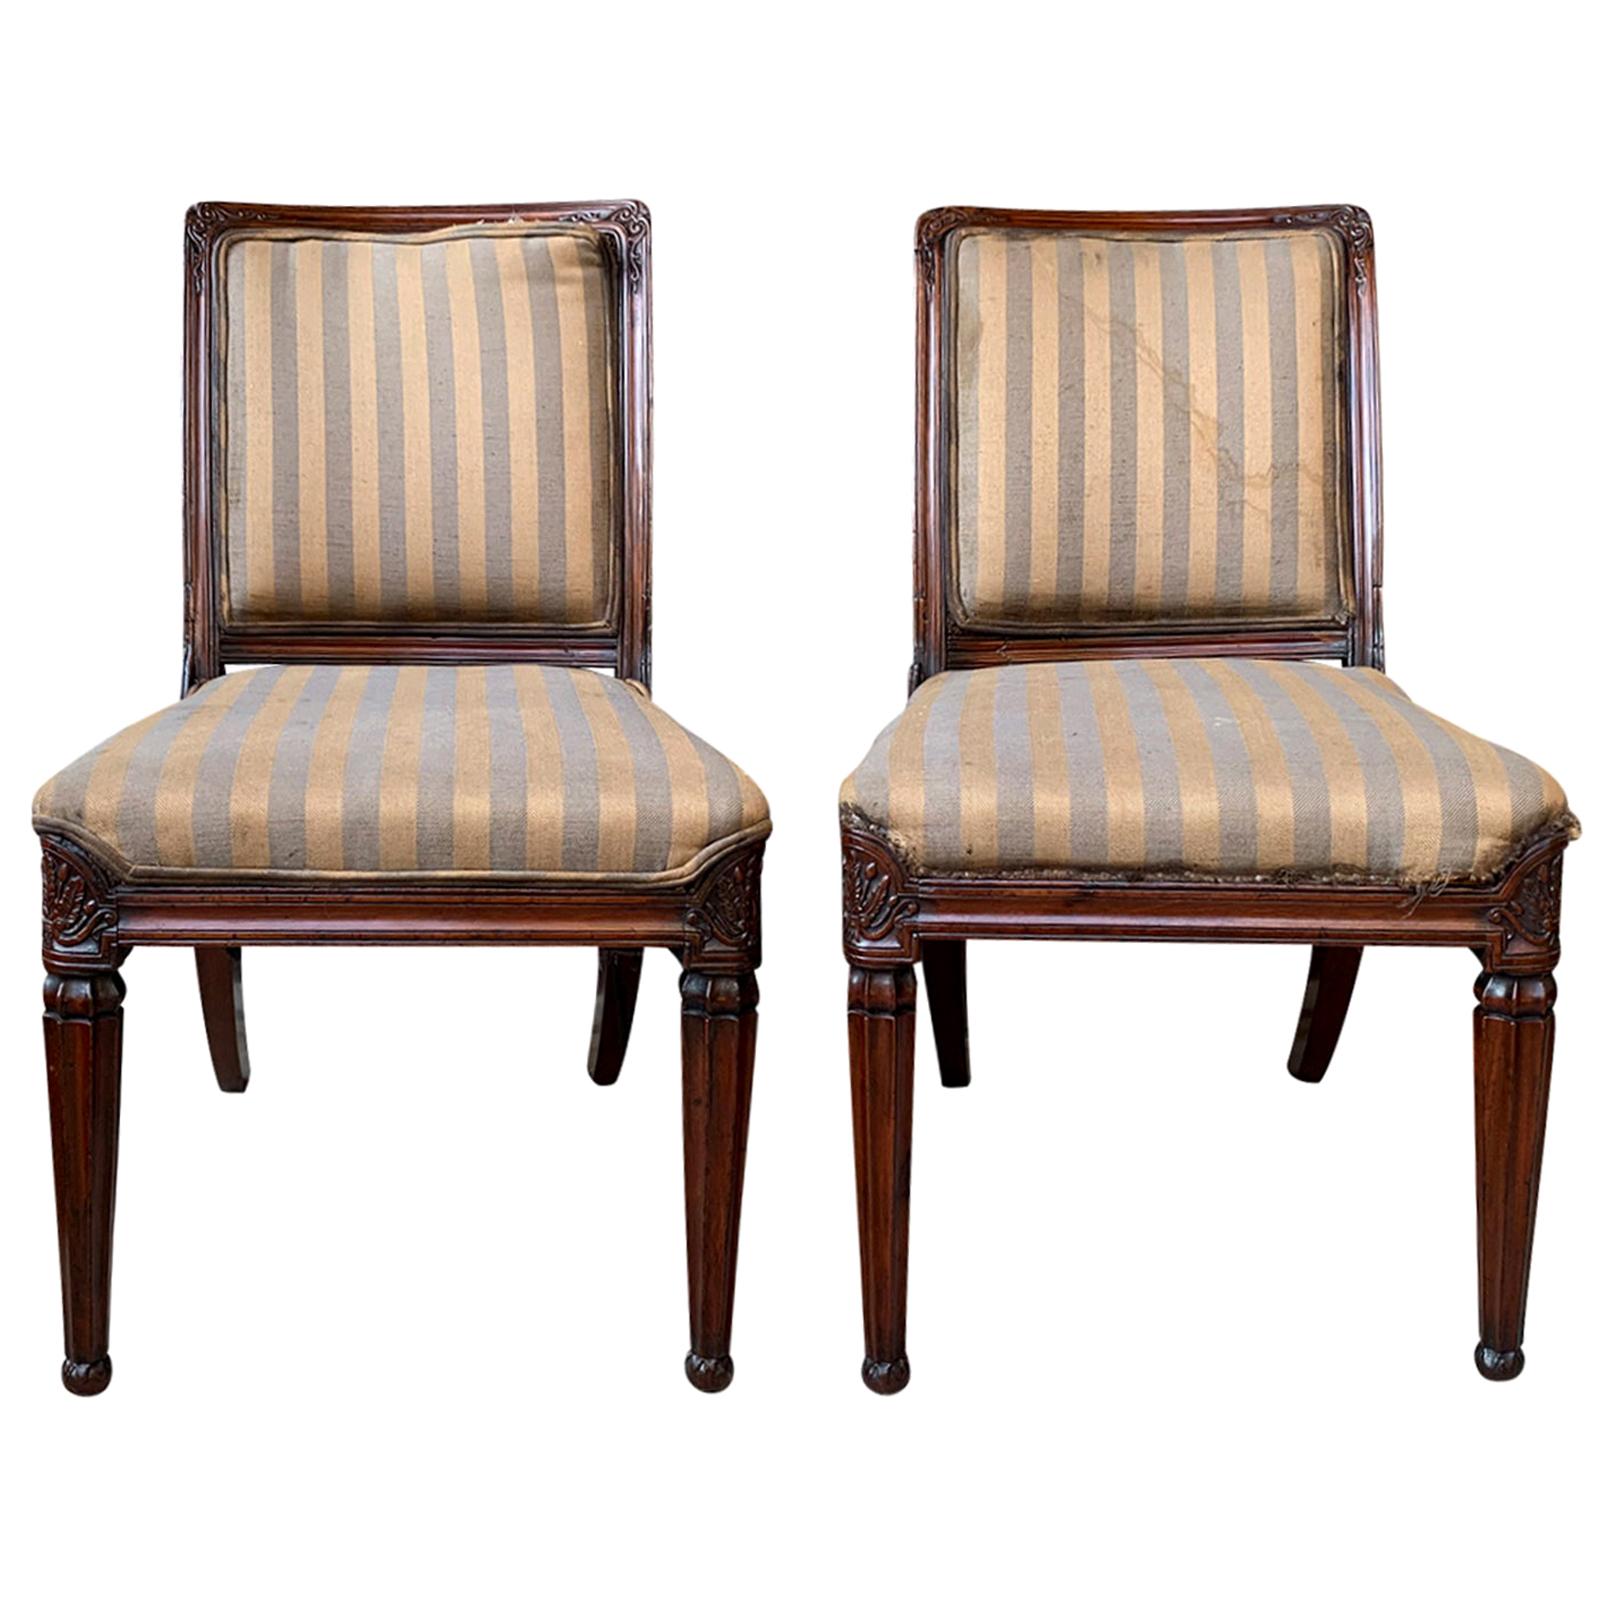 Pair of English Regency Side Chairs, circa 1800